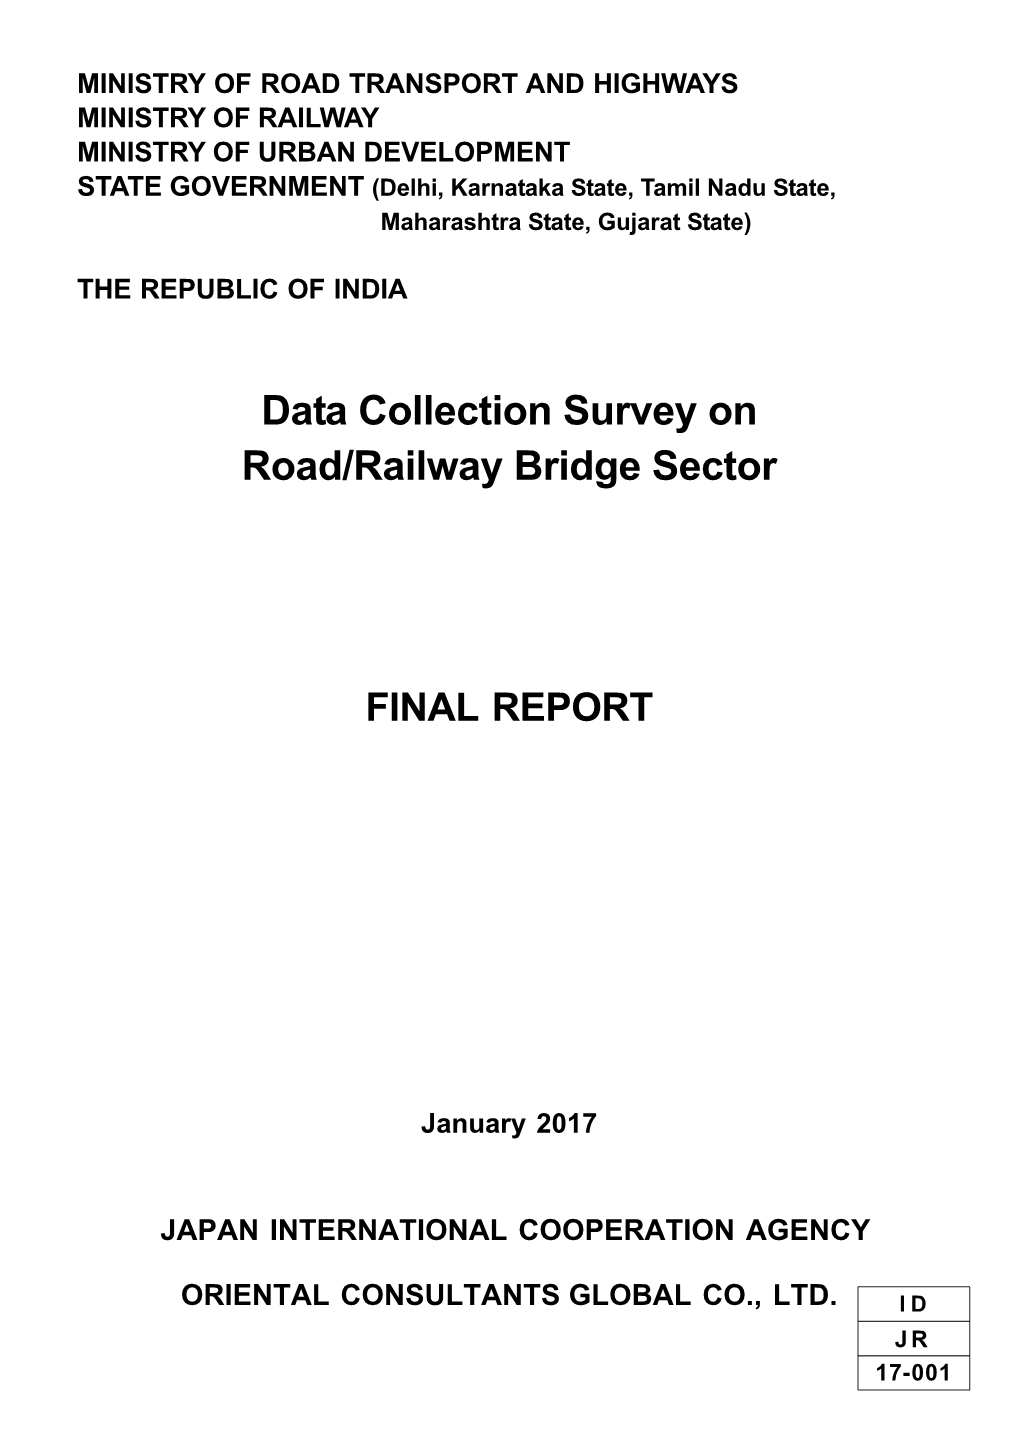 Data Collection Survey on Road/Railway Bridge Sector